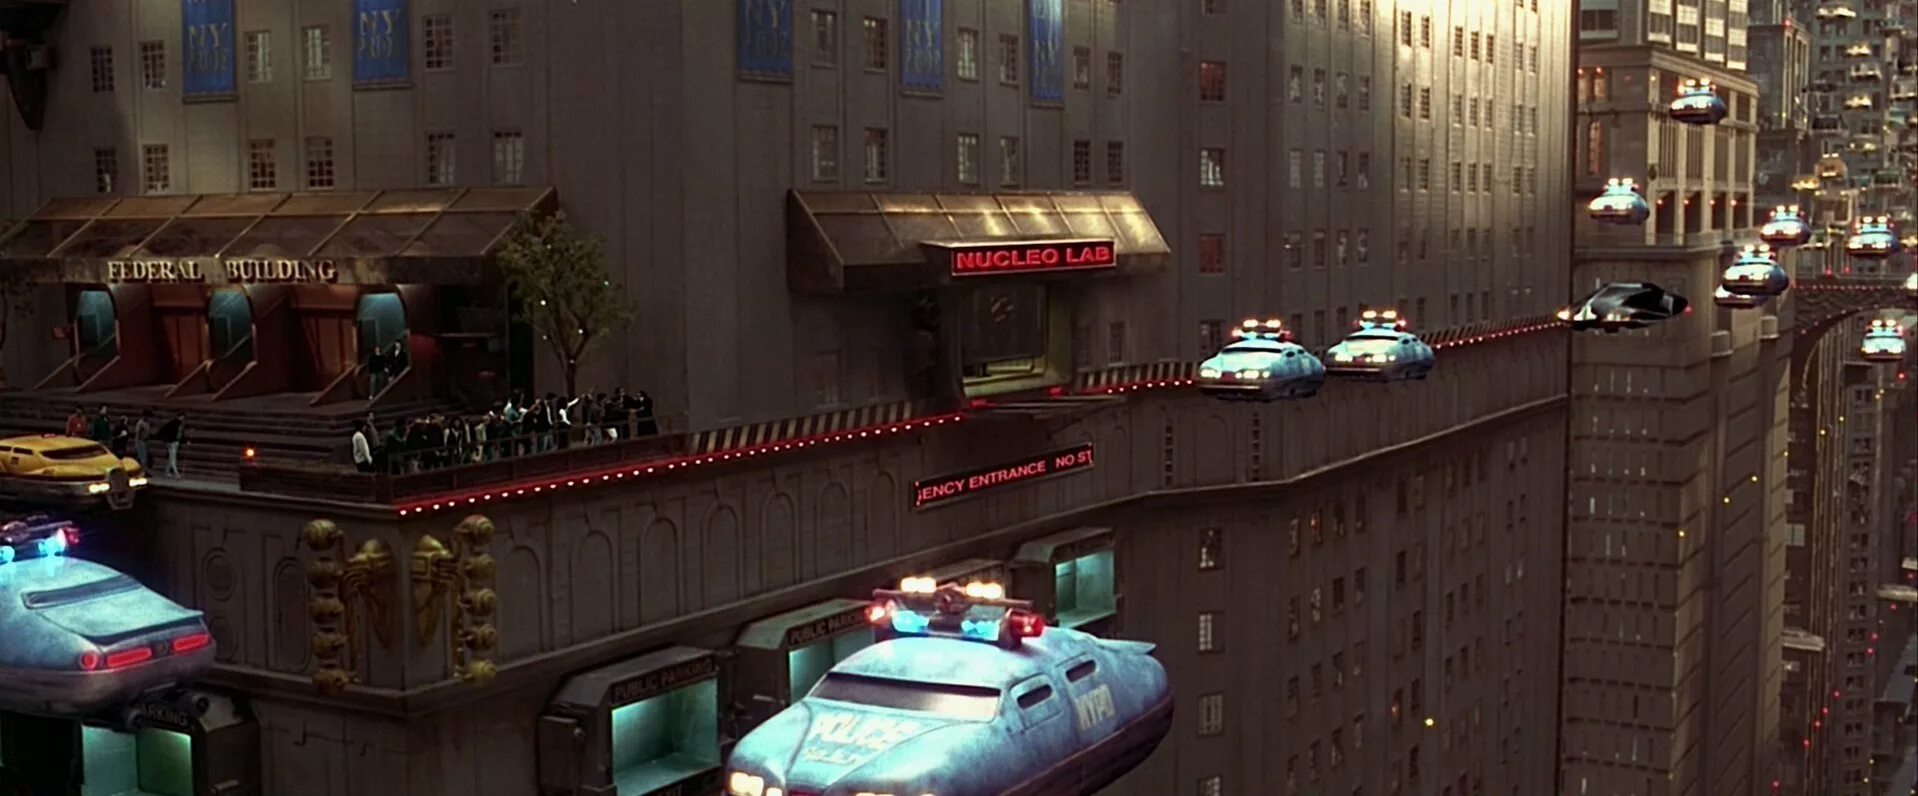 5 элемент ул. Пятый элемент город будущего. Пятый элемент» (1997), такси.